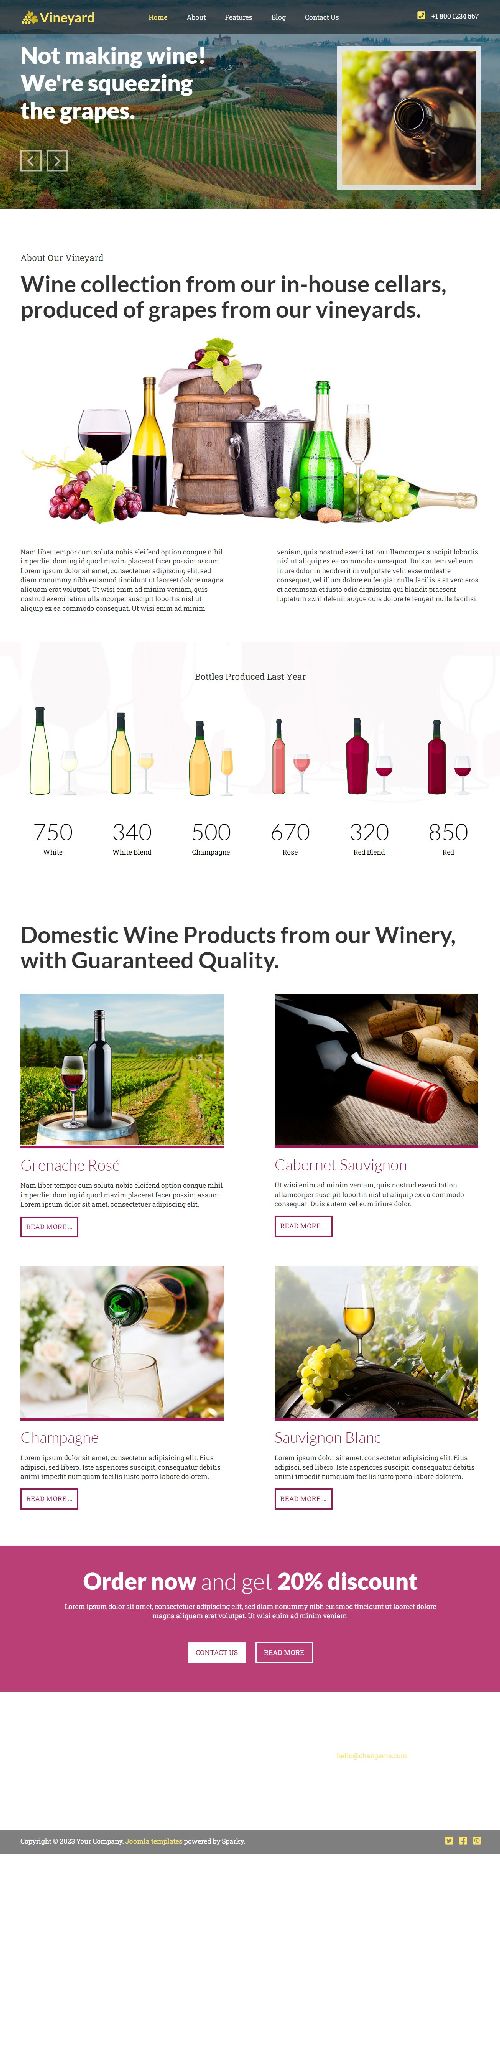 Vineyard - Premium Joomla 4 Template for Vine Producers Site